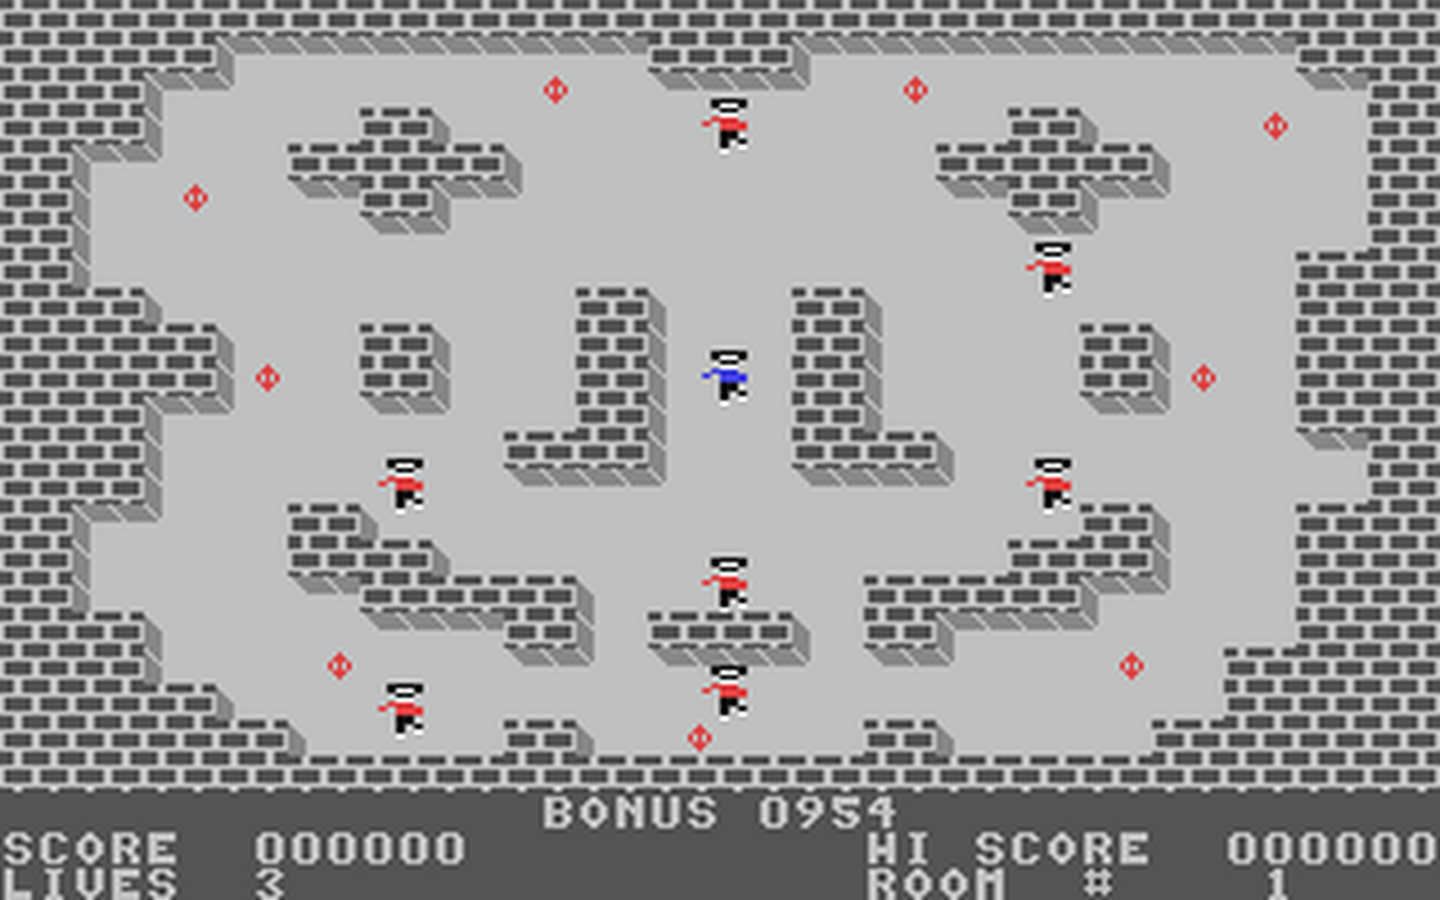 C64 GameBase Assault_on_Spook_Castle_2_-_Return_to_Spook_Castle Gold_Disk,_Inc. 1985